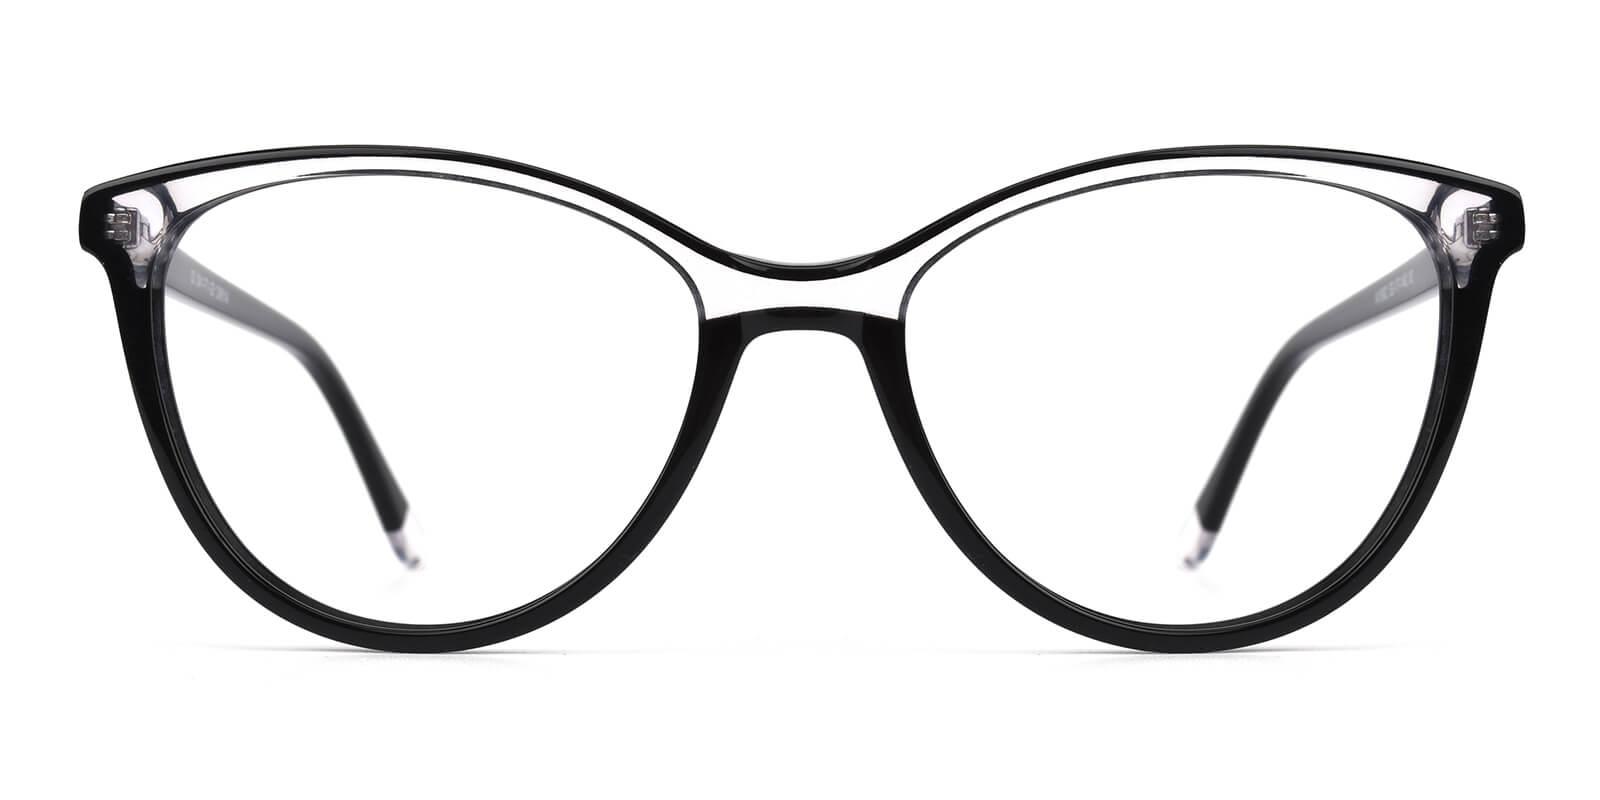 Galaxy-Black-Cat / Round-Acetate-Eyeglasses-detail